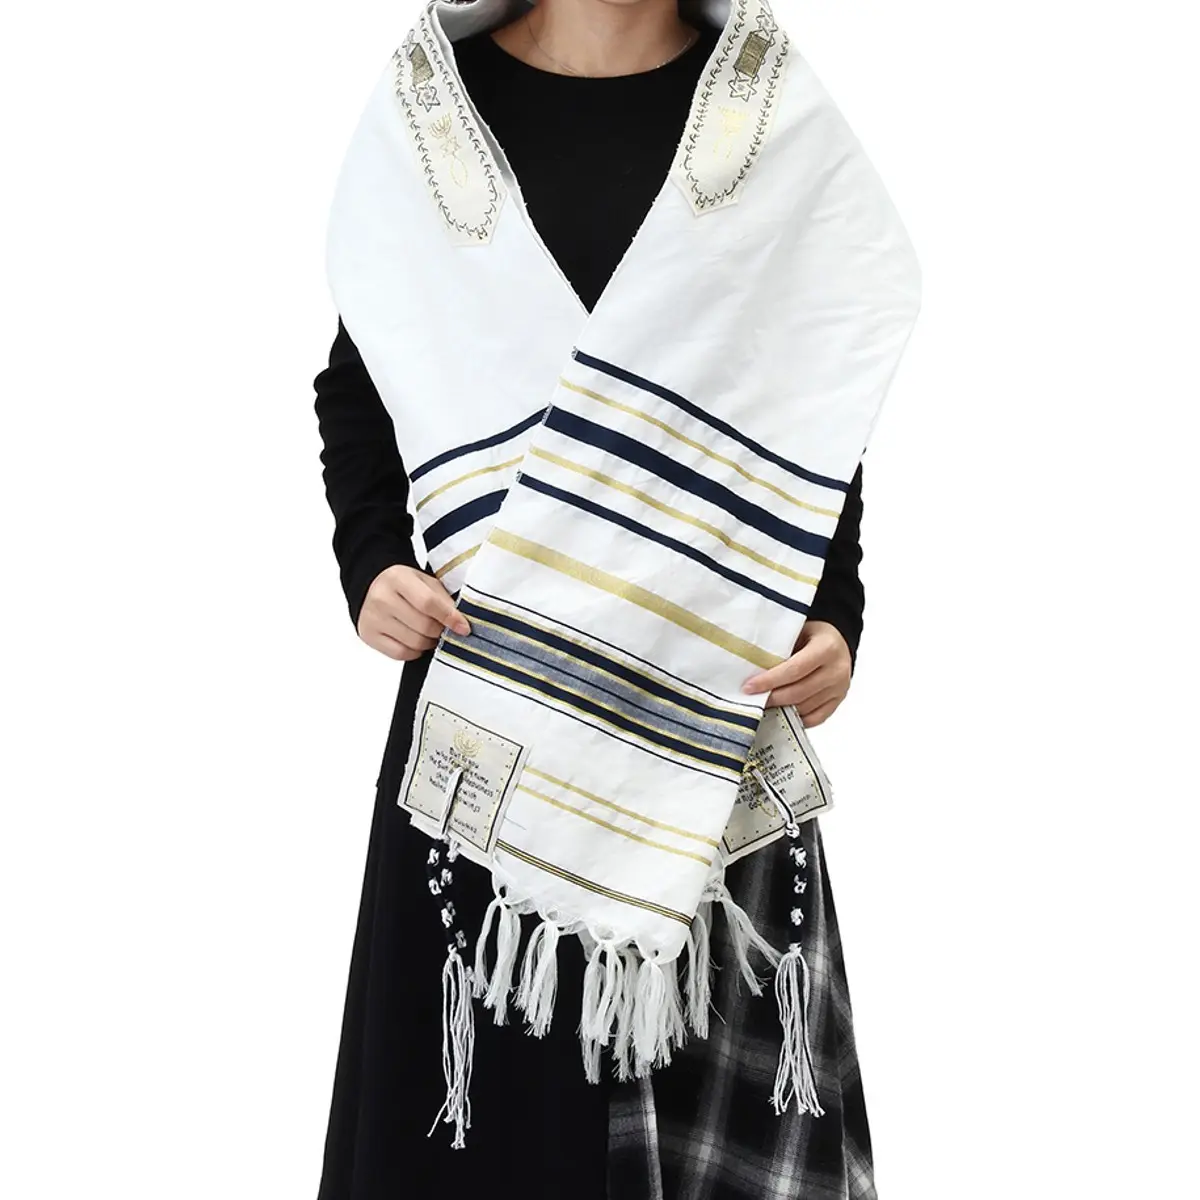 Ethnic scarf Tallit Jewish prayer shawl Religious prayer scarves Israel tallit Morning prayer shawl 80x180cm Judaism